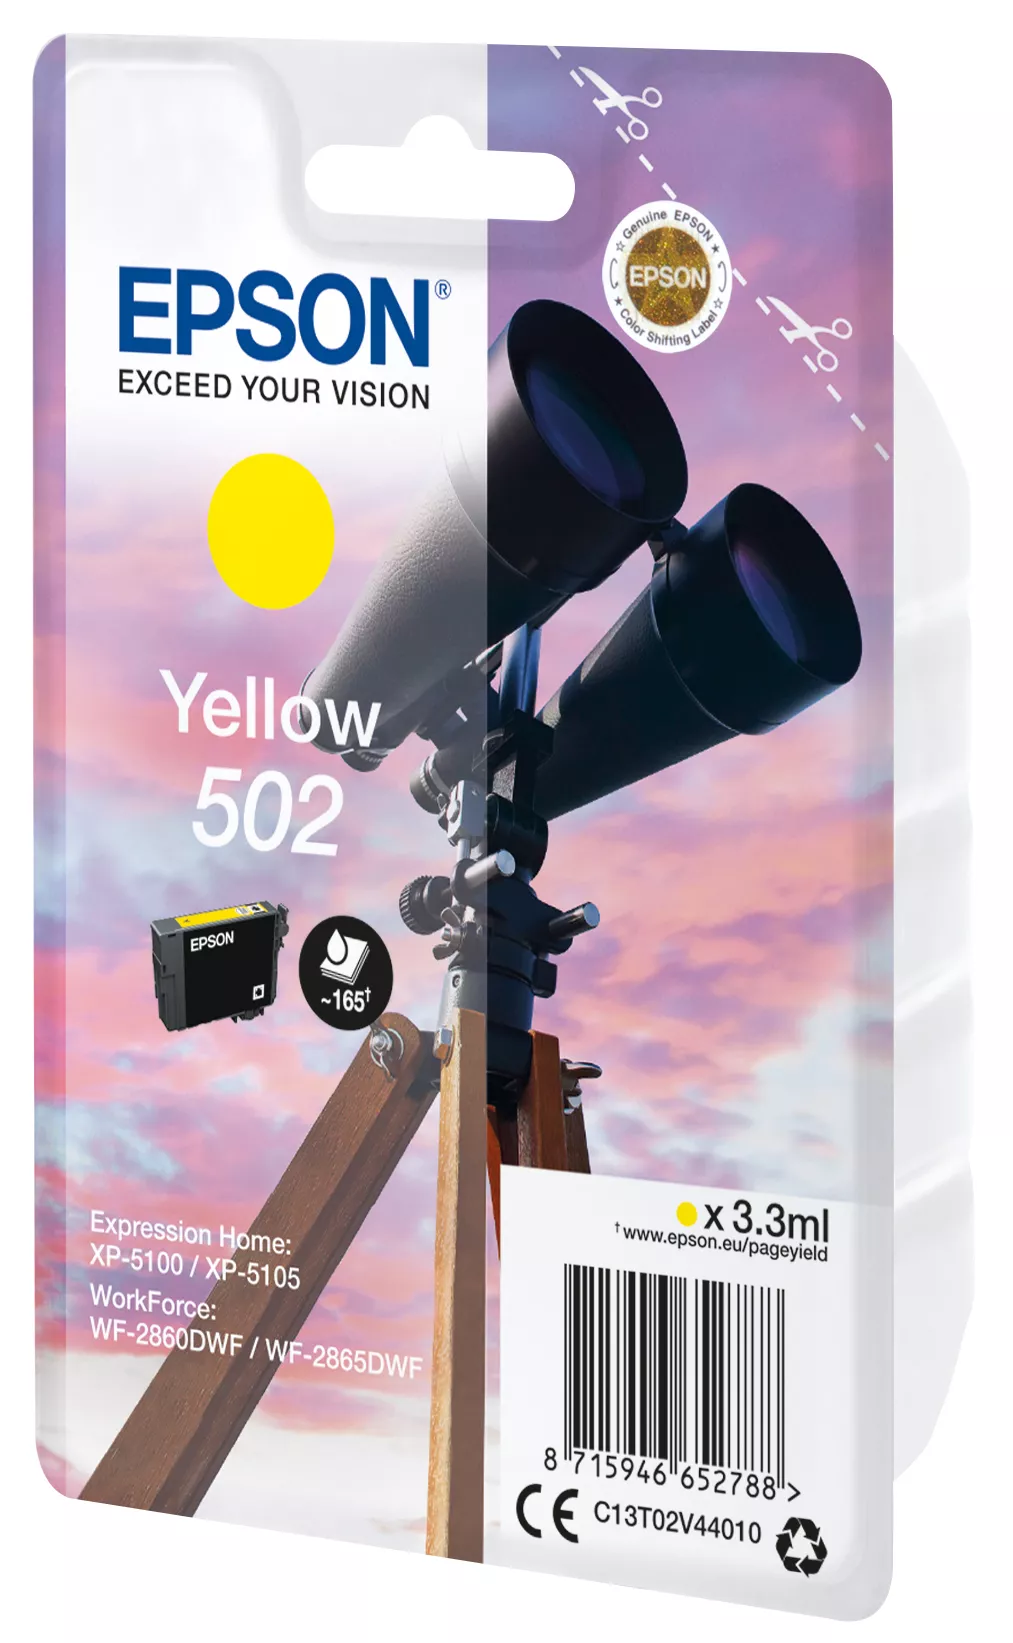 Vente EPSON Singlepack Yellow 502 Ink Epson au meilleur prix - visuel 2